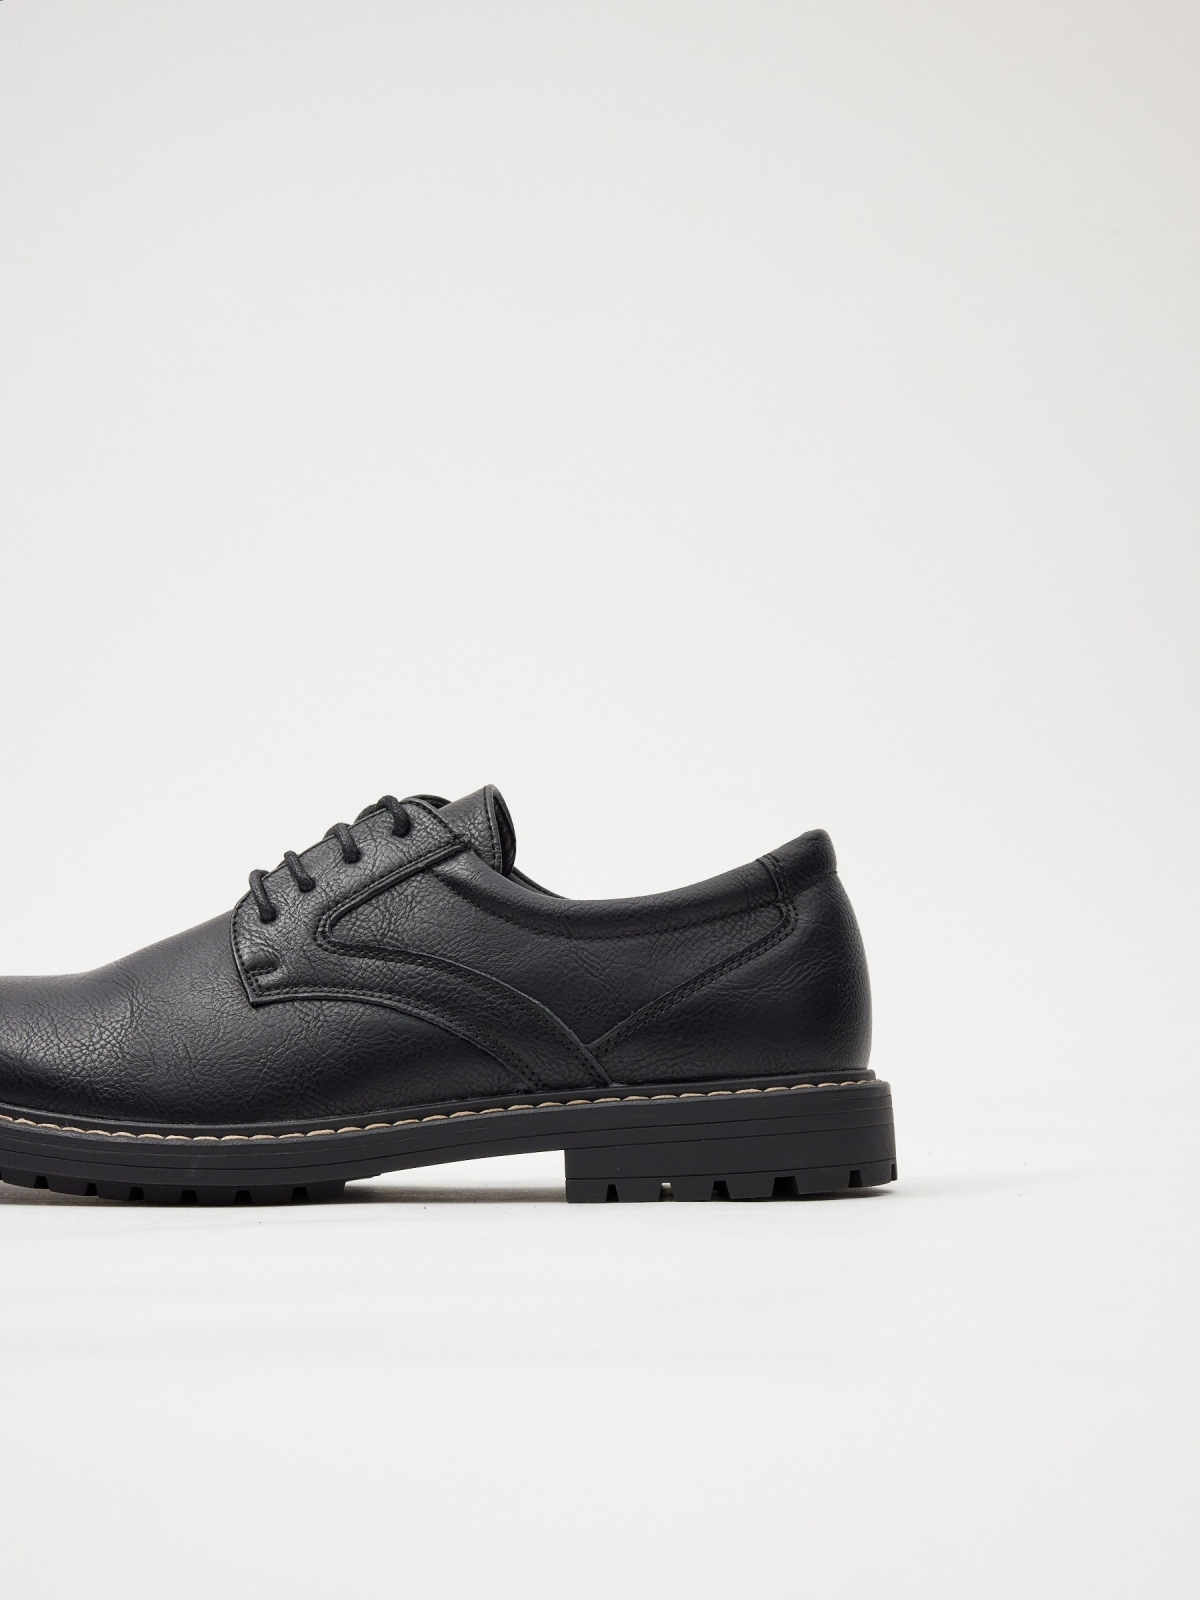 Classic basic leatherette shoe black detail view